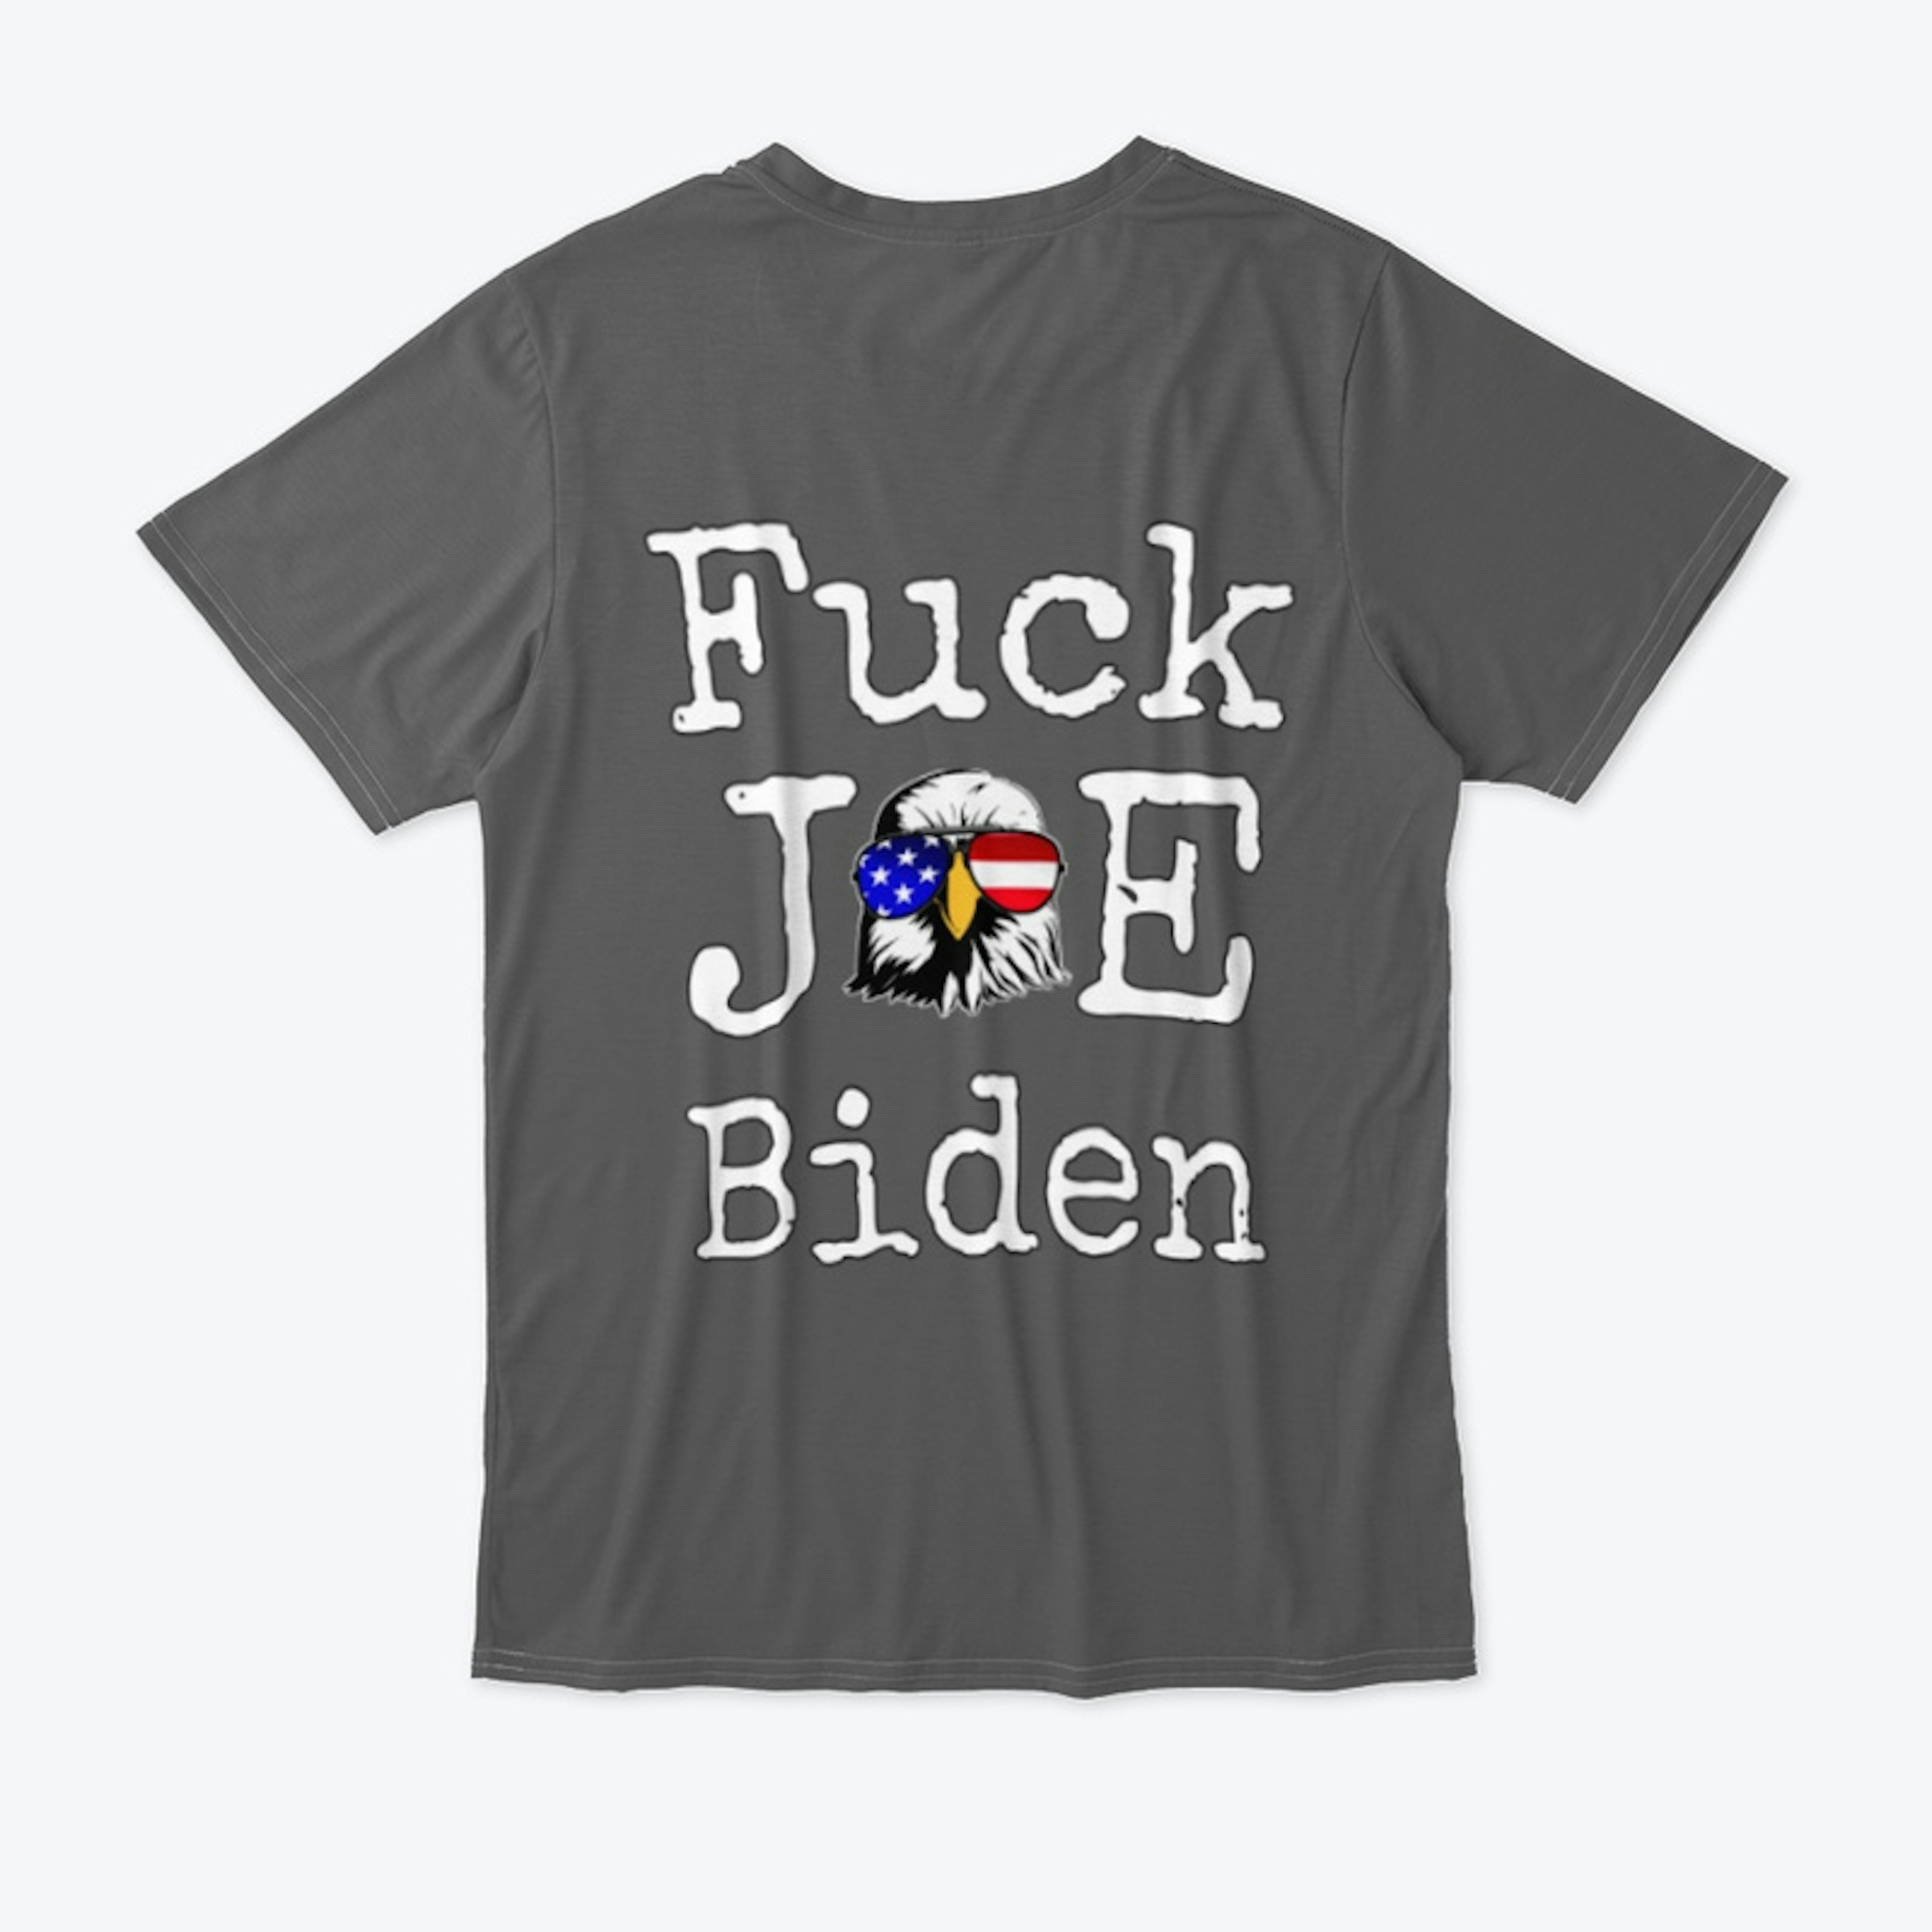 Fuck Joe Biden